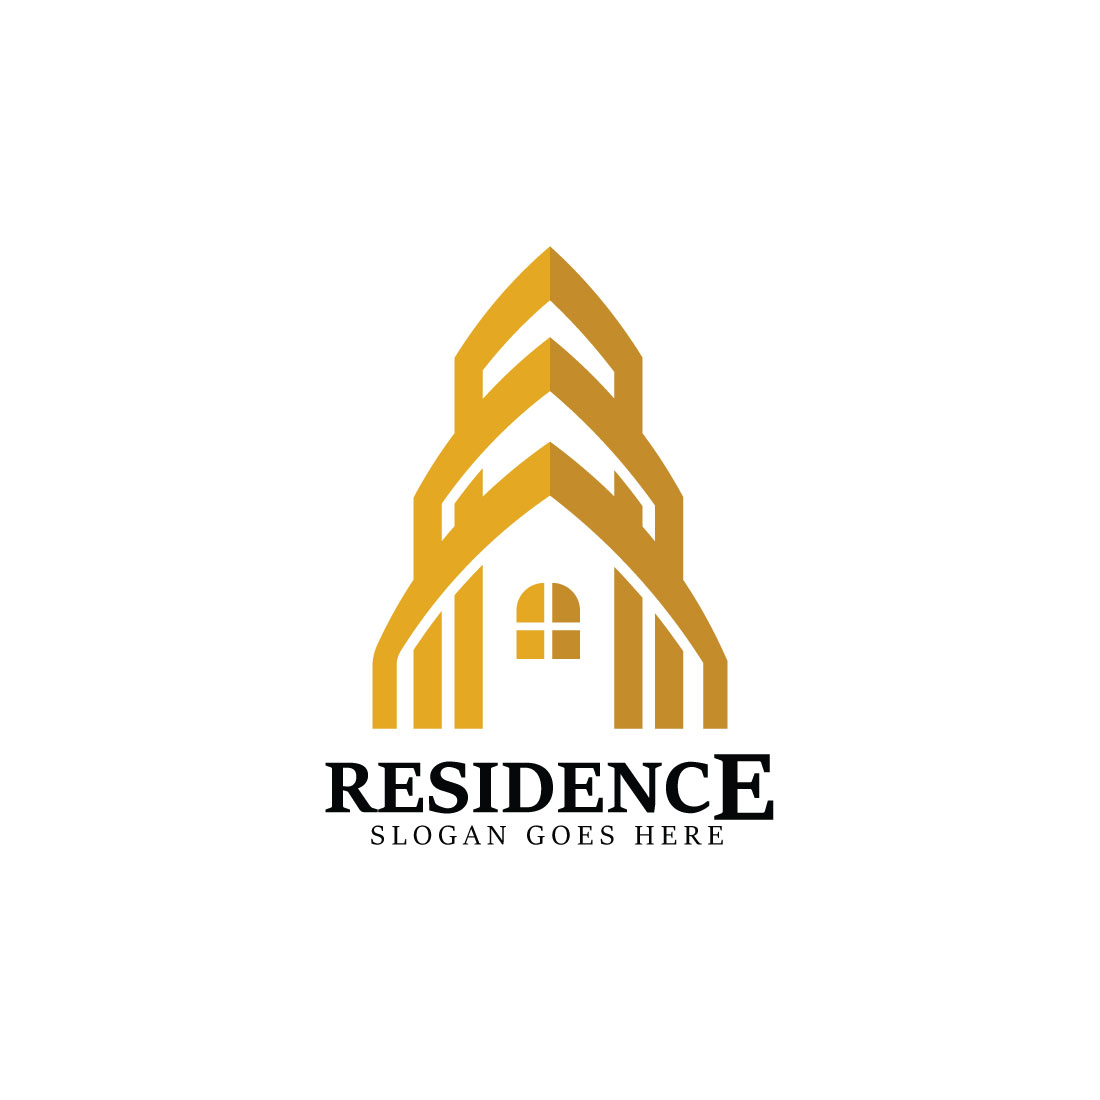 Residence logo design illustration cover image.